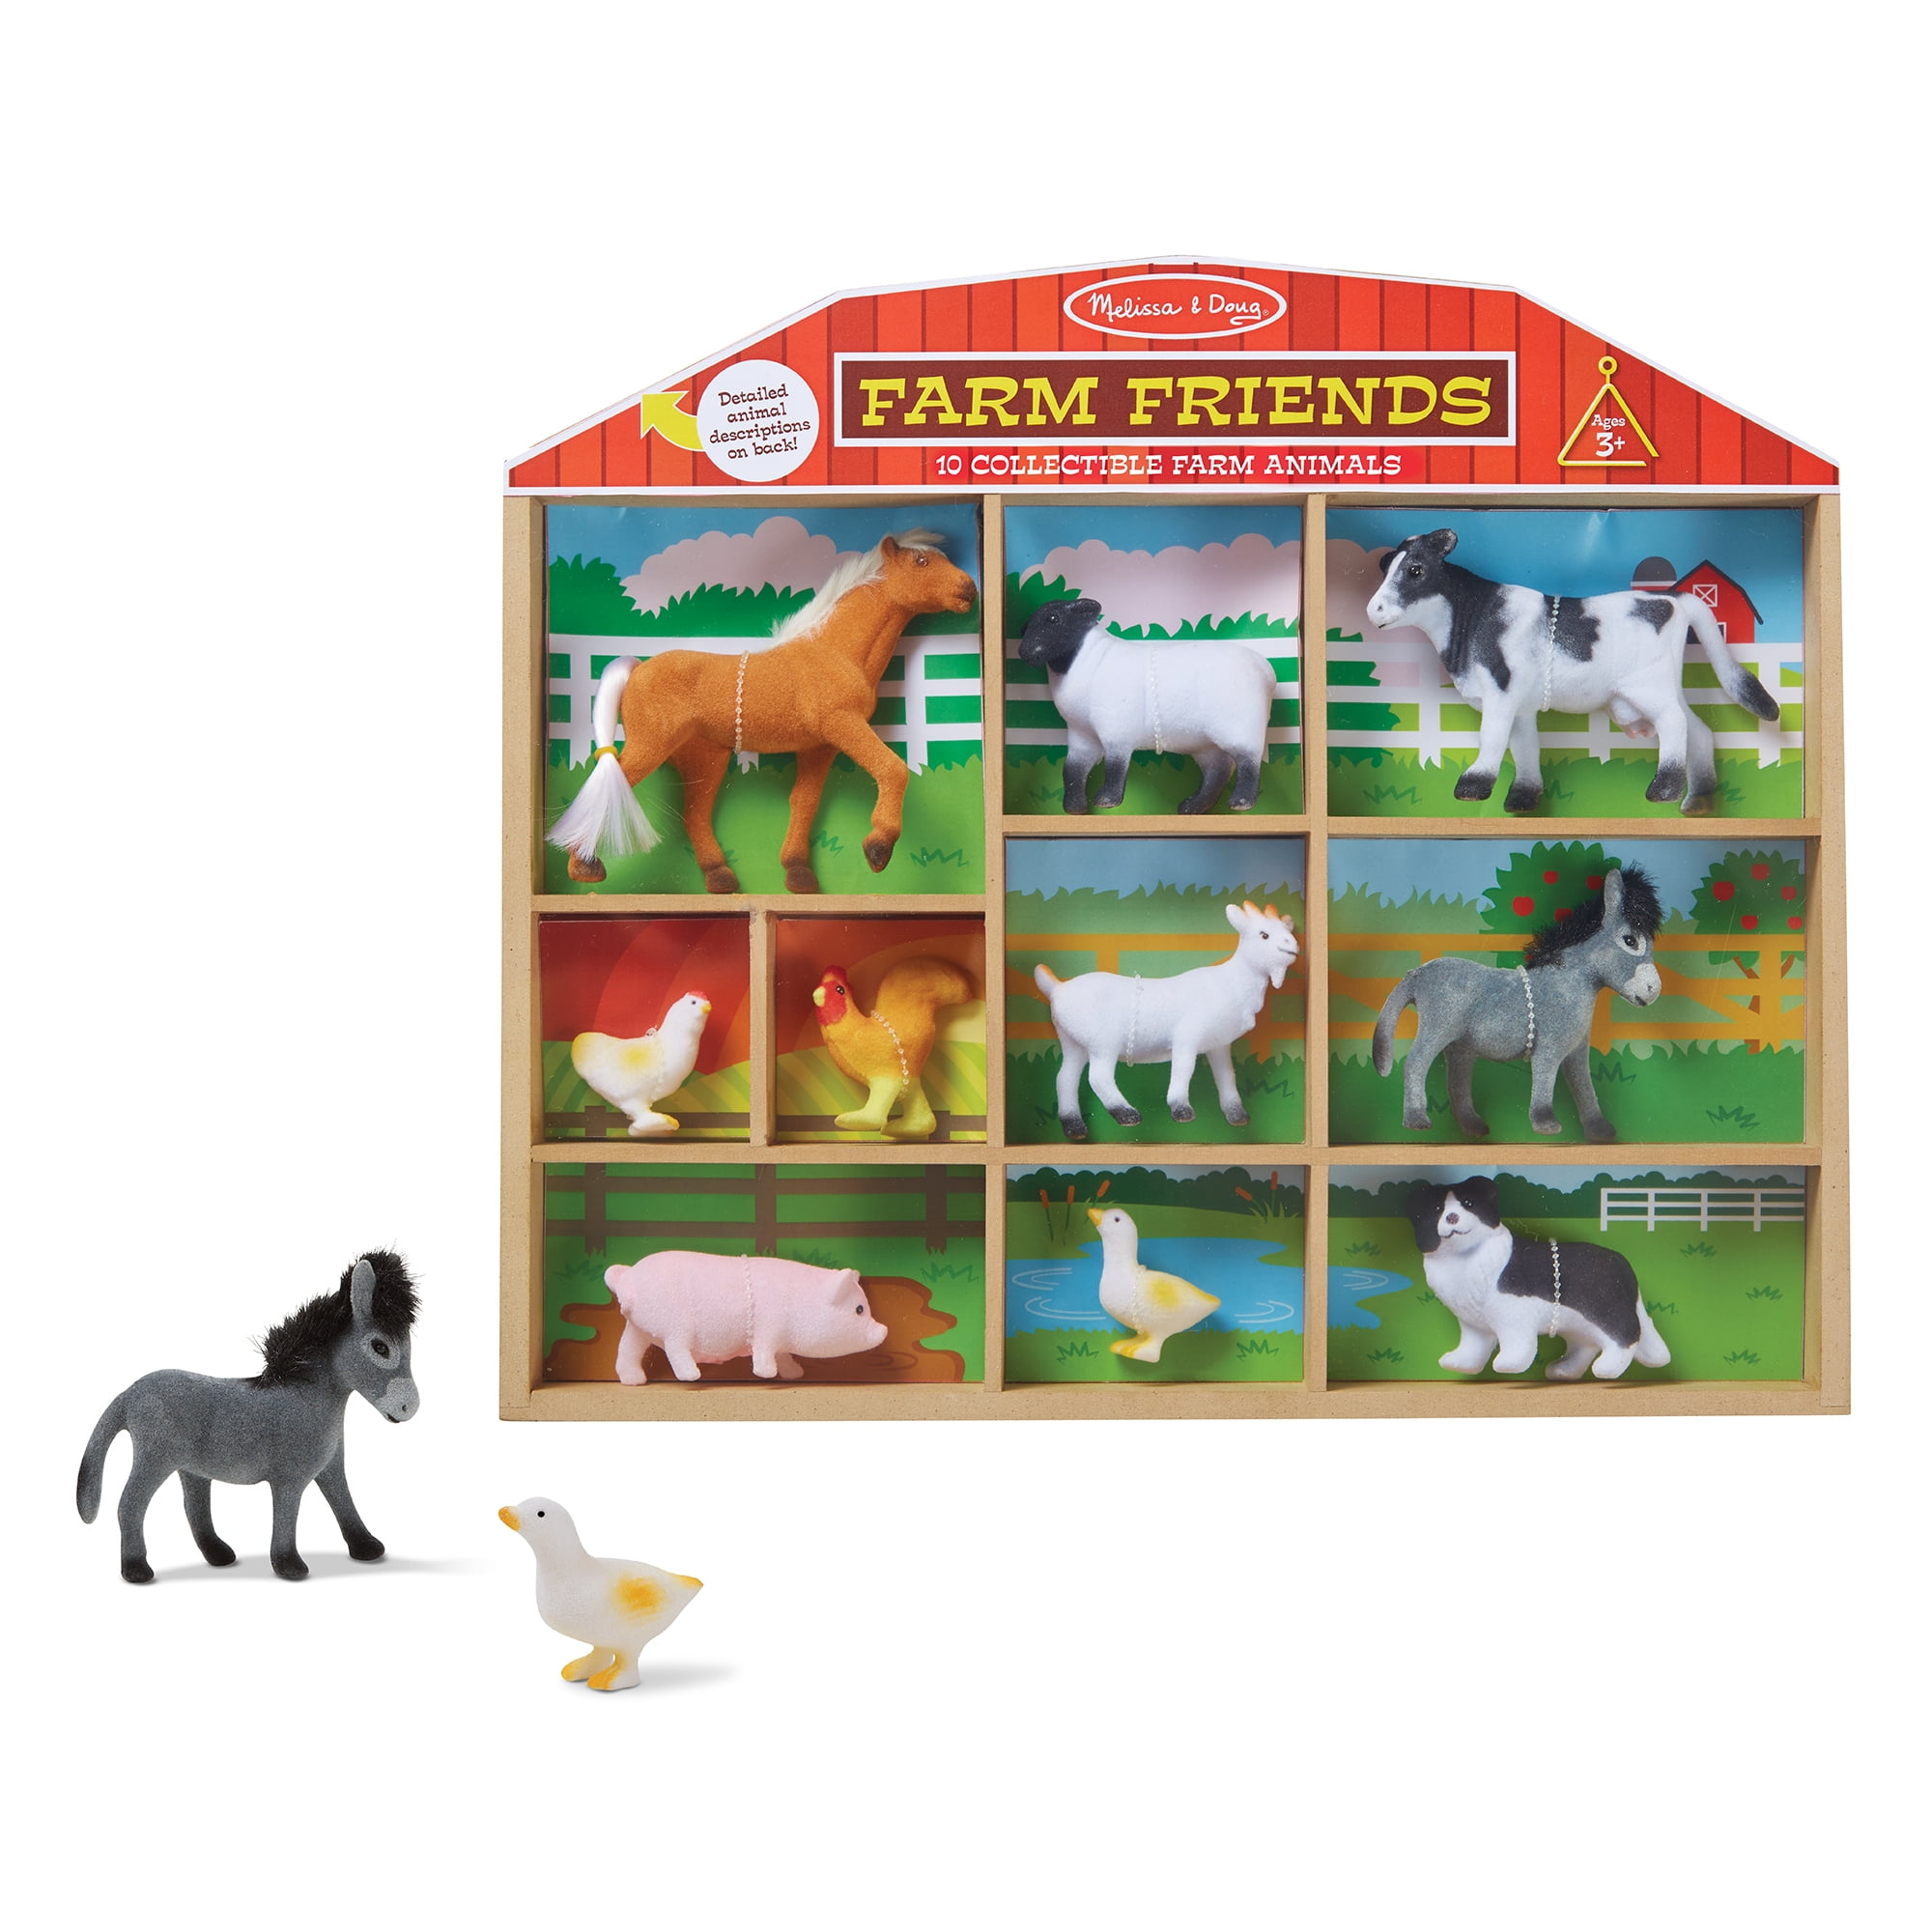 Classic Wooden Toy Farm Friends Push Puppet Yellow Dog Blue Spots 